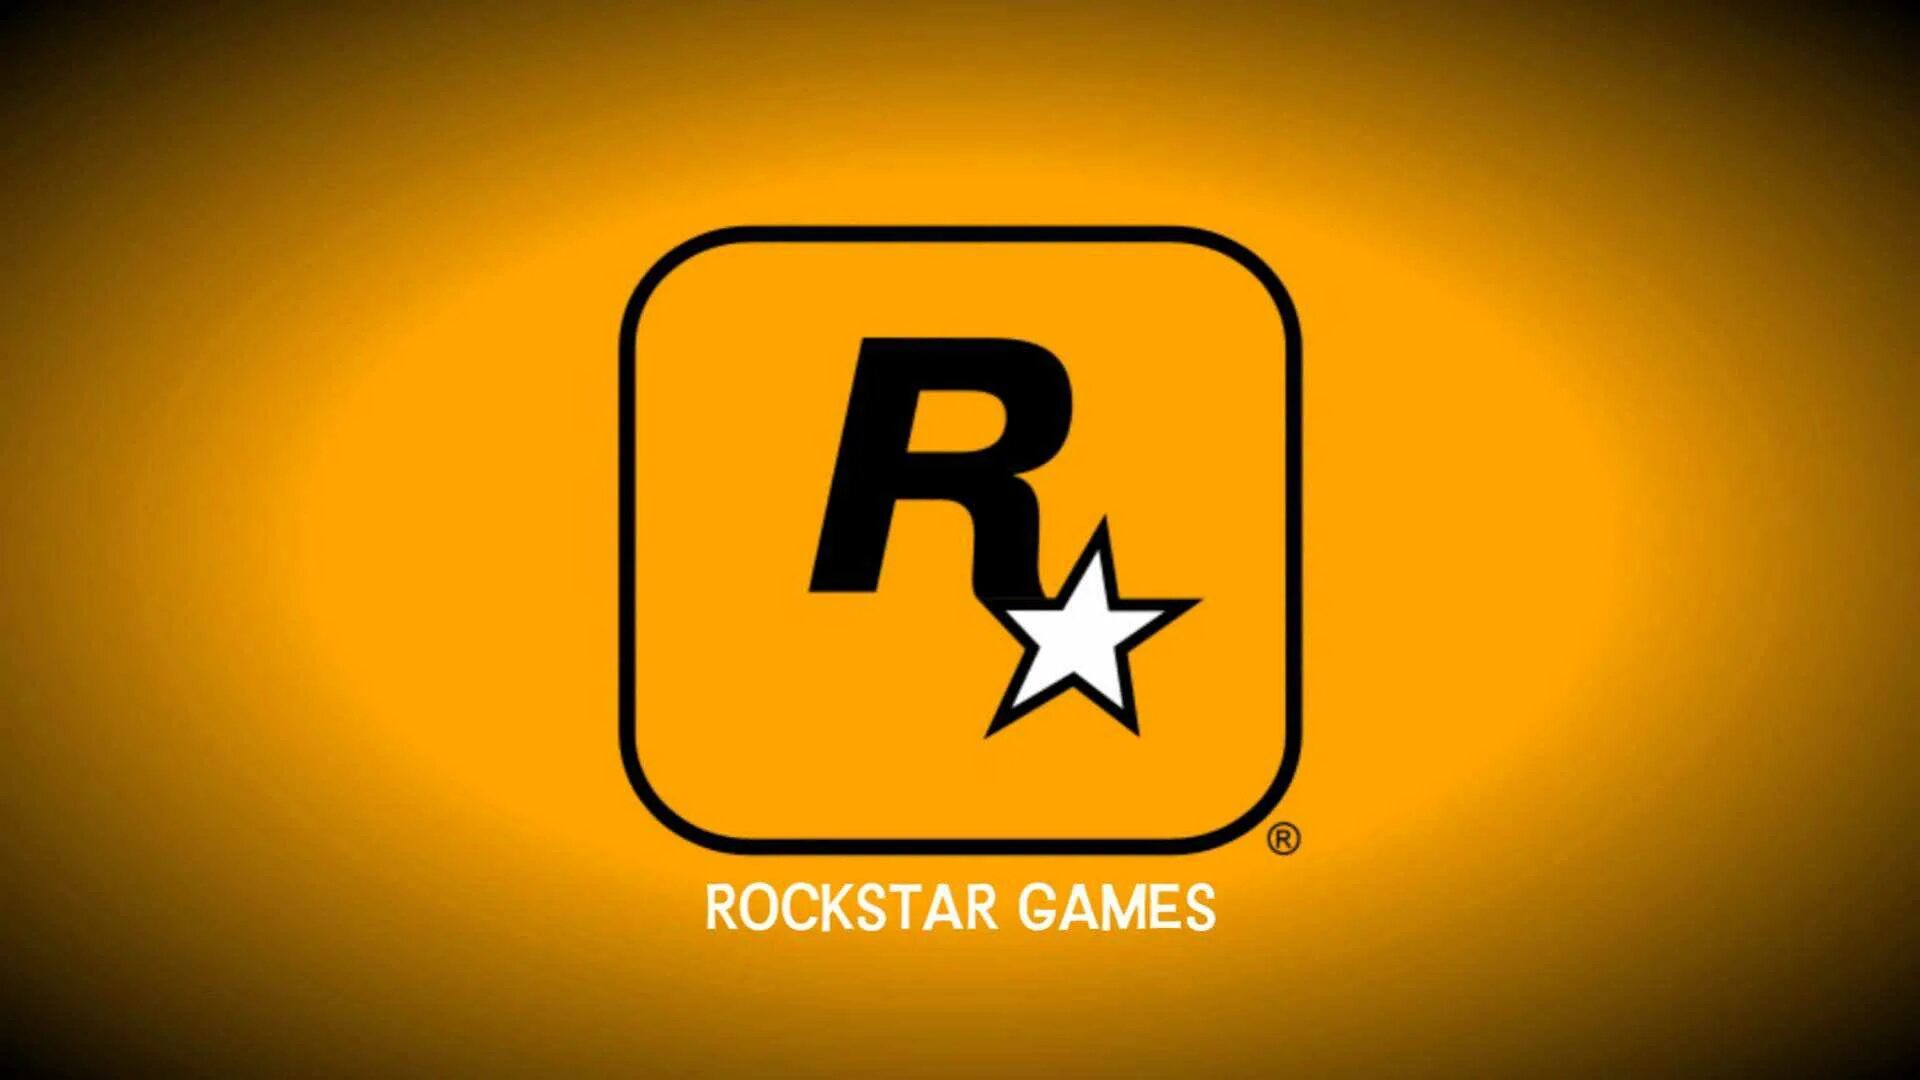 Rockstar games 134. Rockstar. Логотип рокстар. Rockstar games. Значок Rockstar games.